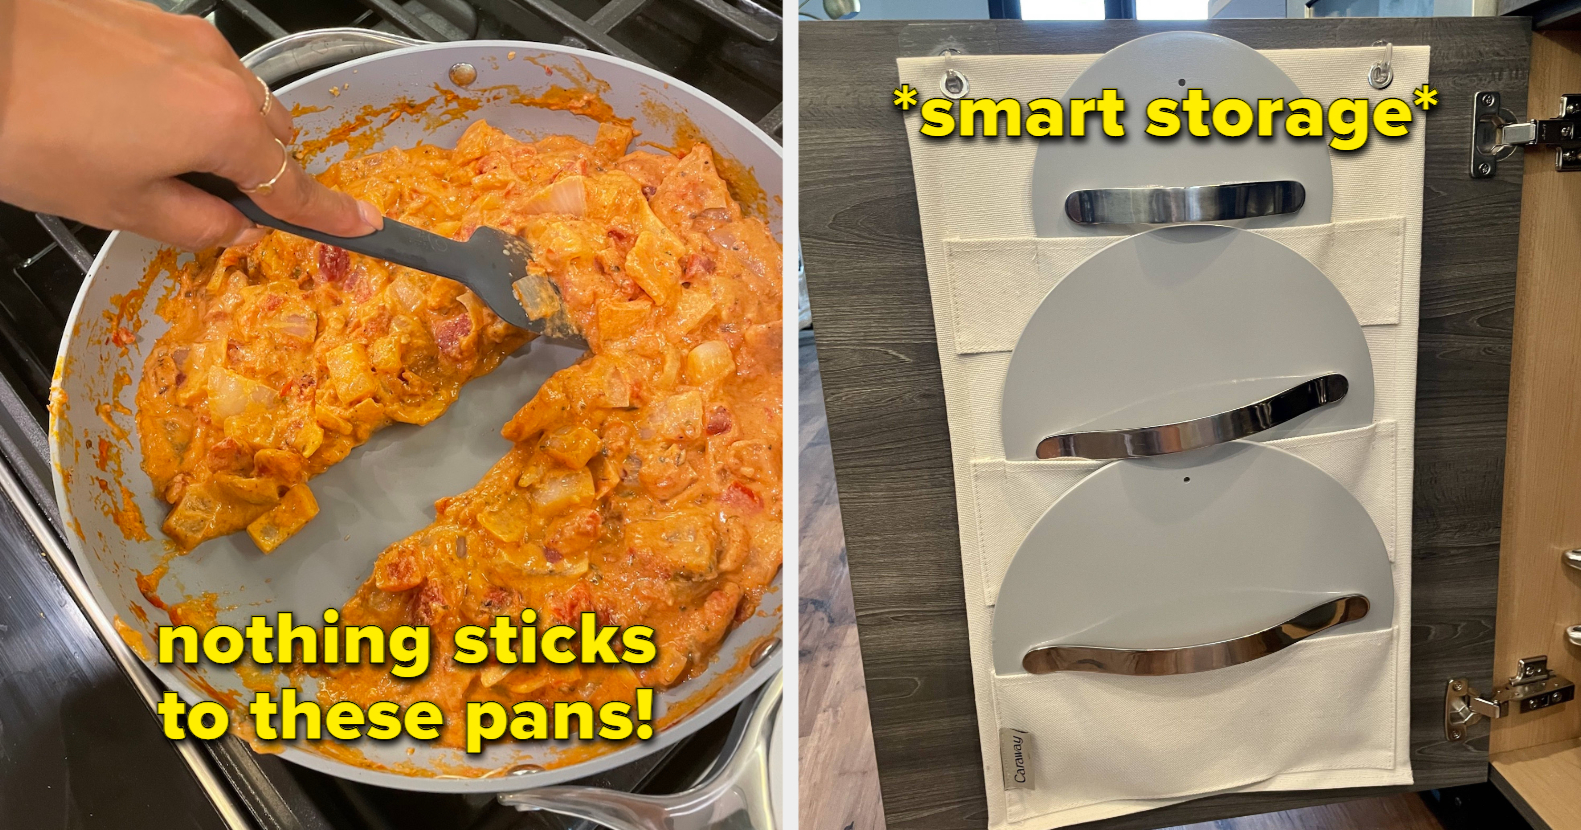 Caraway Home 7-Piece Perracotta Orange Non-Stick Ceramic Cookware Set +  Reviews